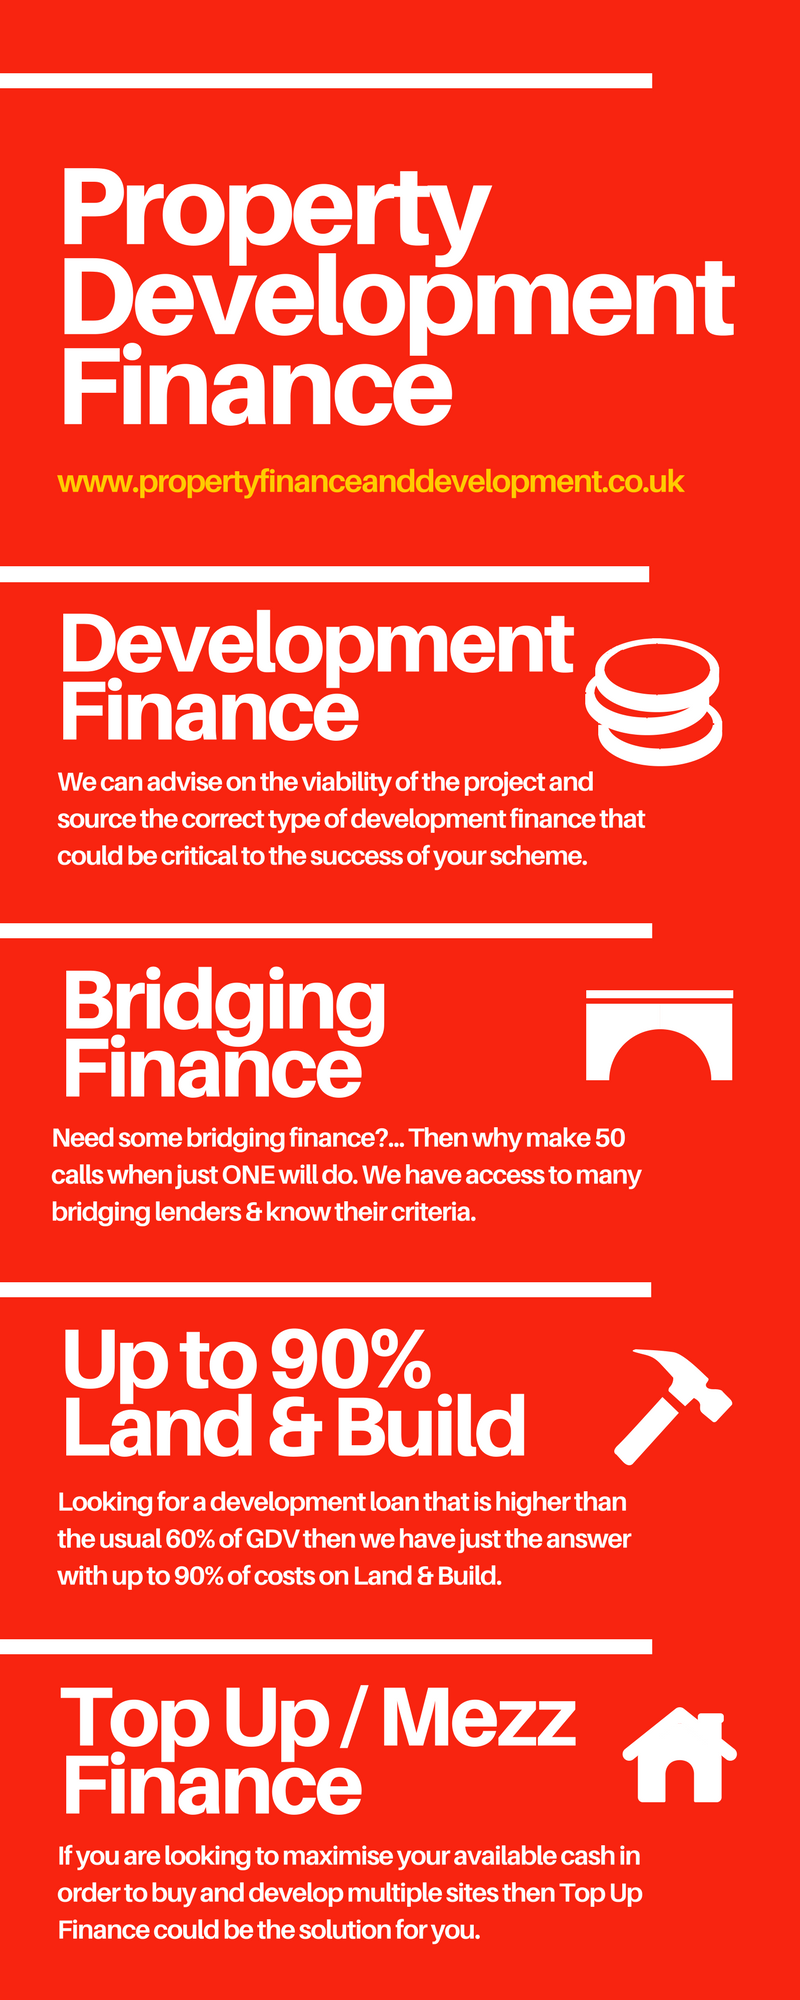 Property-development-finance-offerings-infographic-galleryr